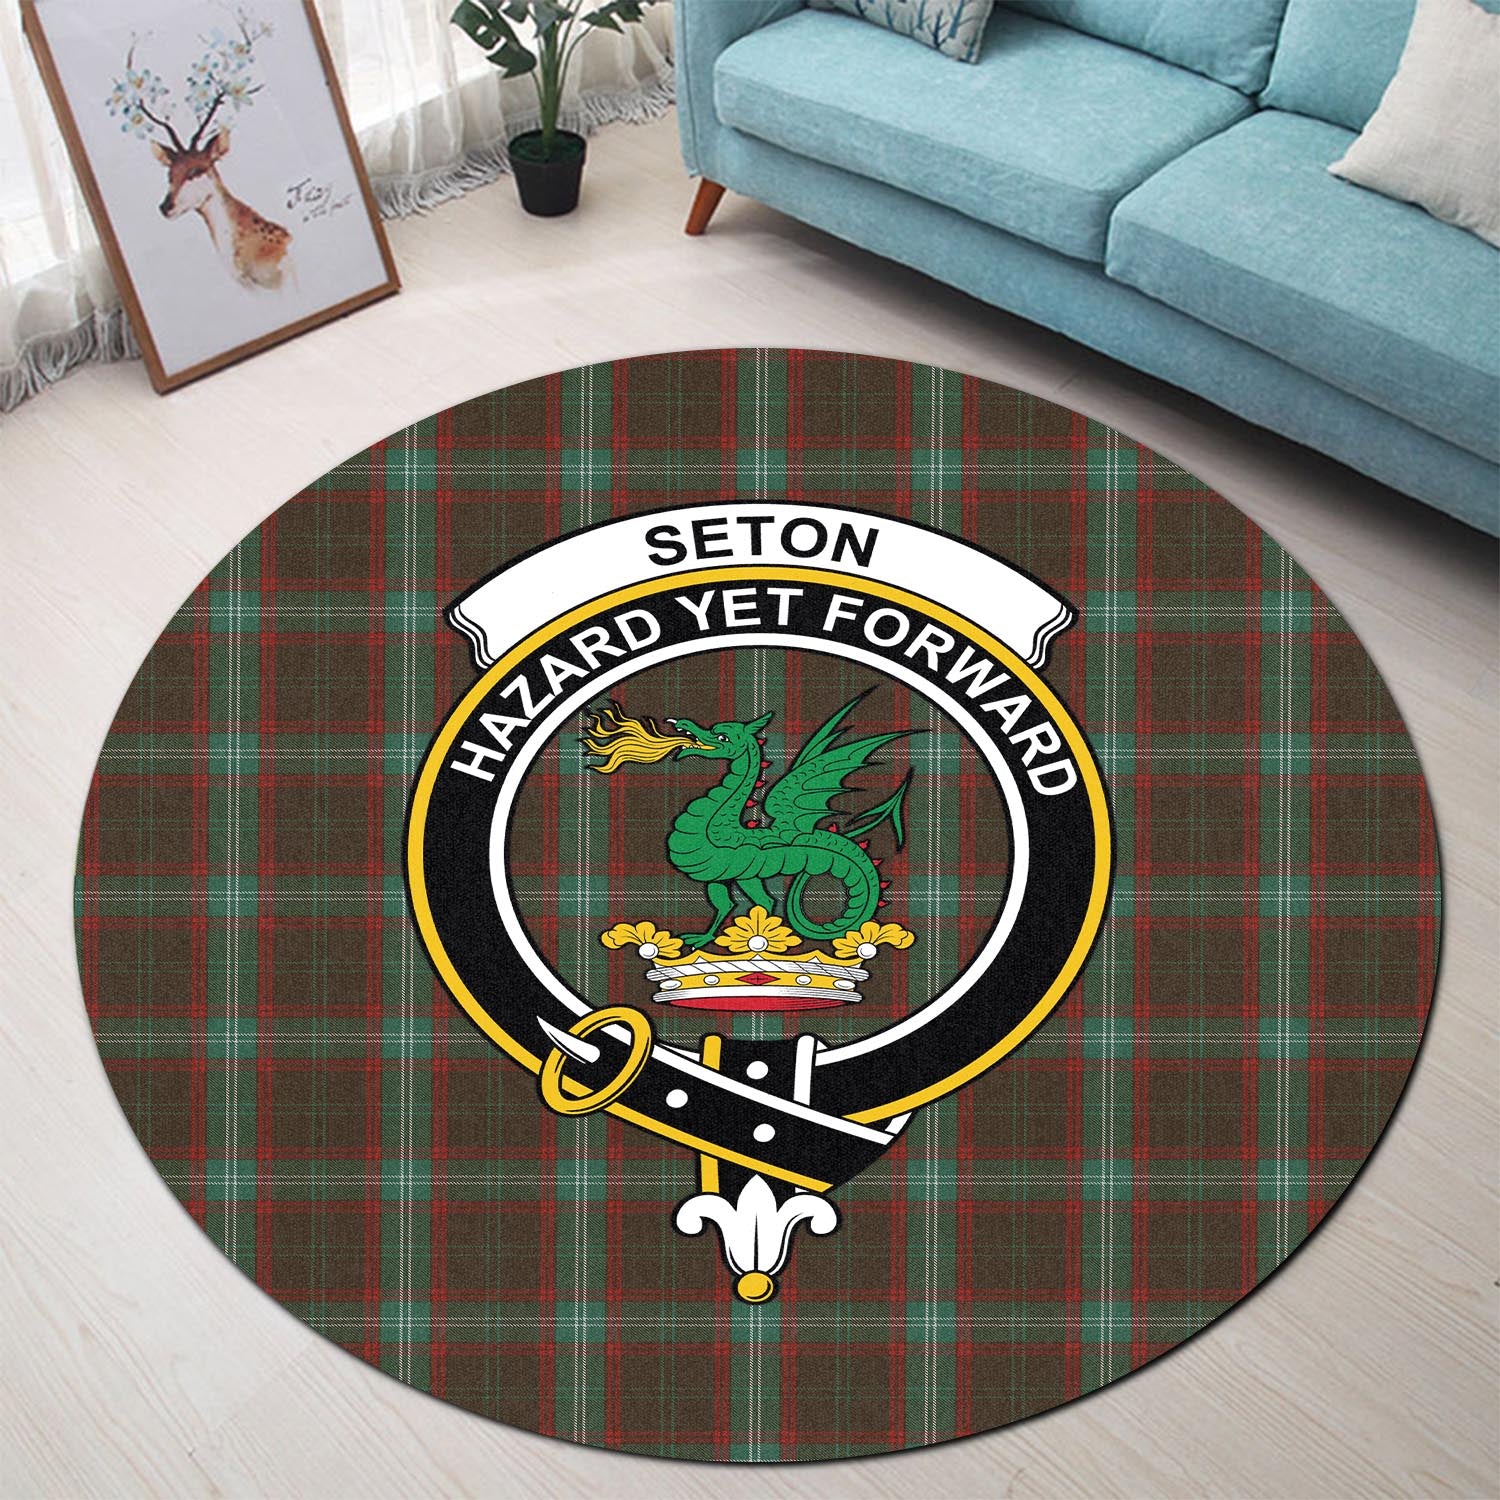 seton-hunting-tartan-round-rug-with-family-crest